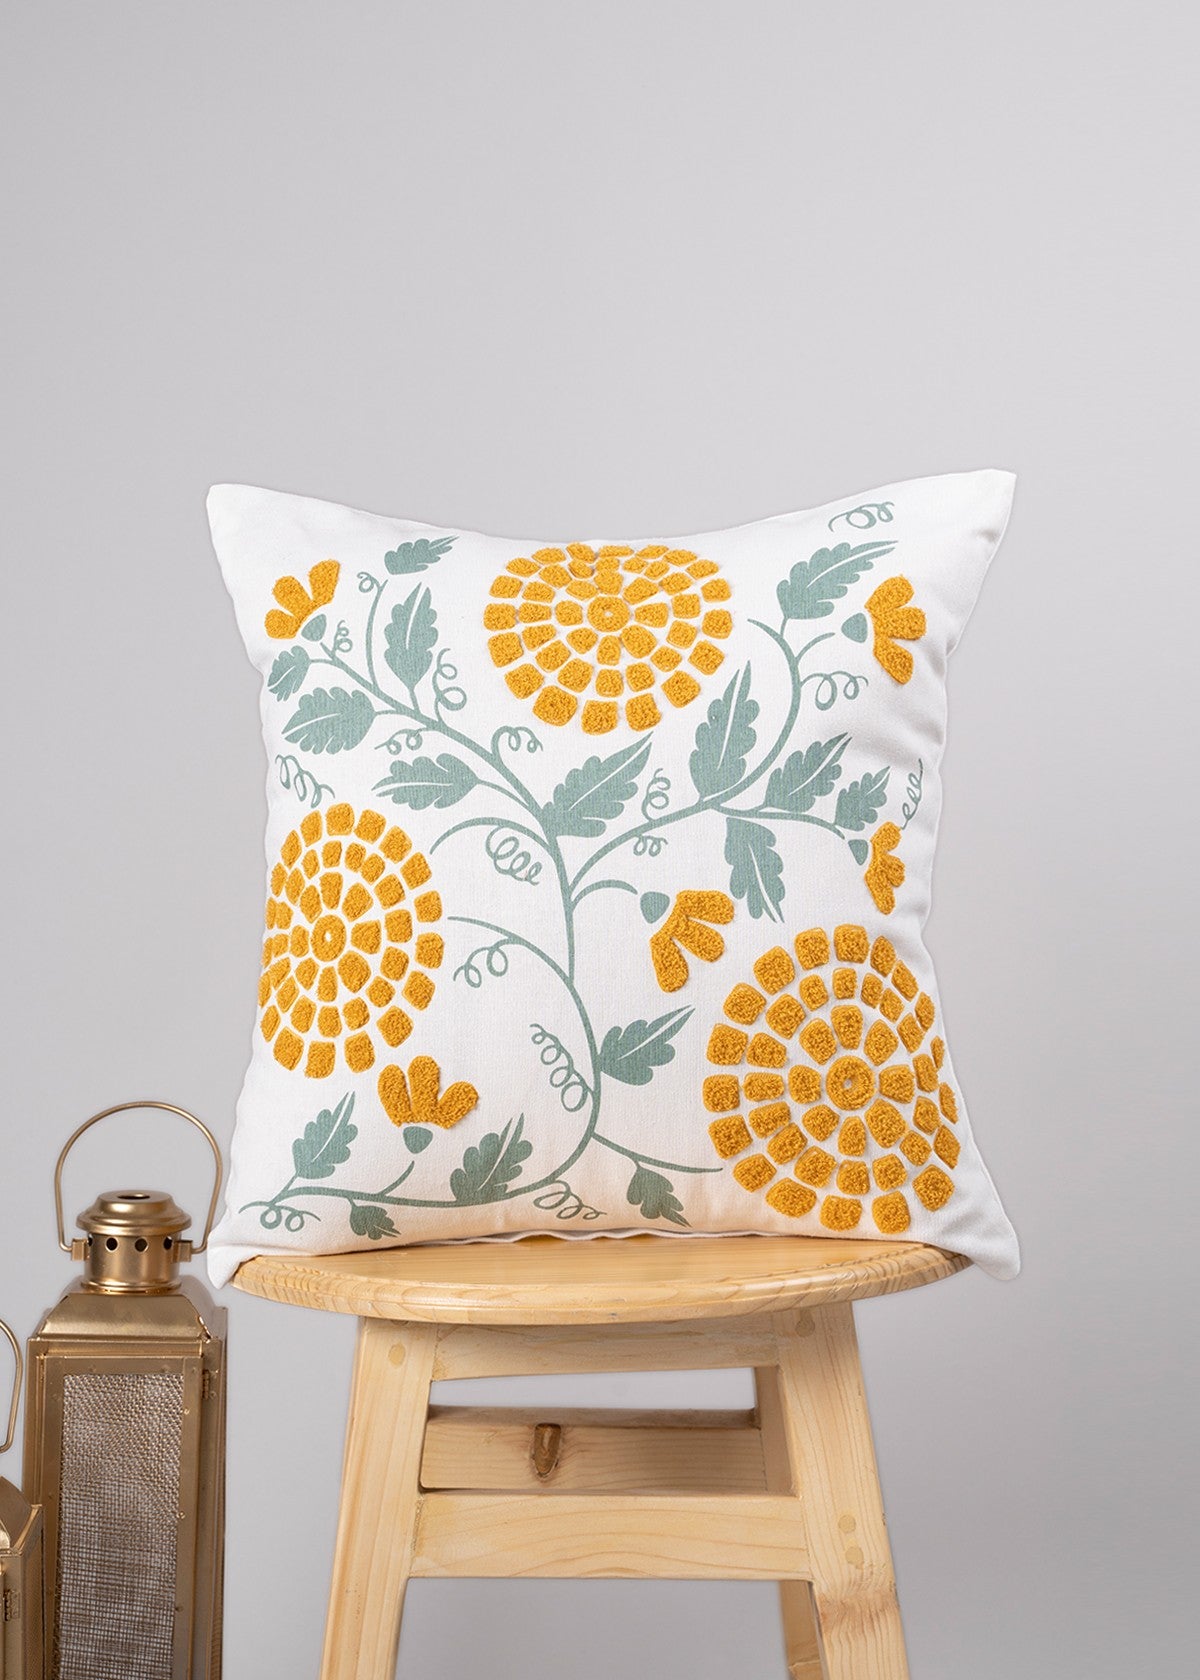 Mystique Marigold 100% cotton embroidered decorative cushion cover for sofa - Green